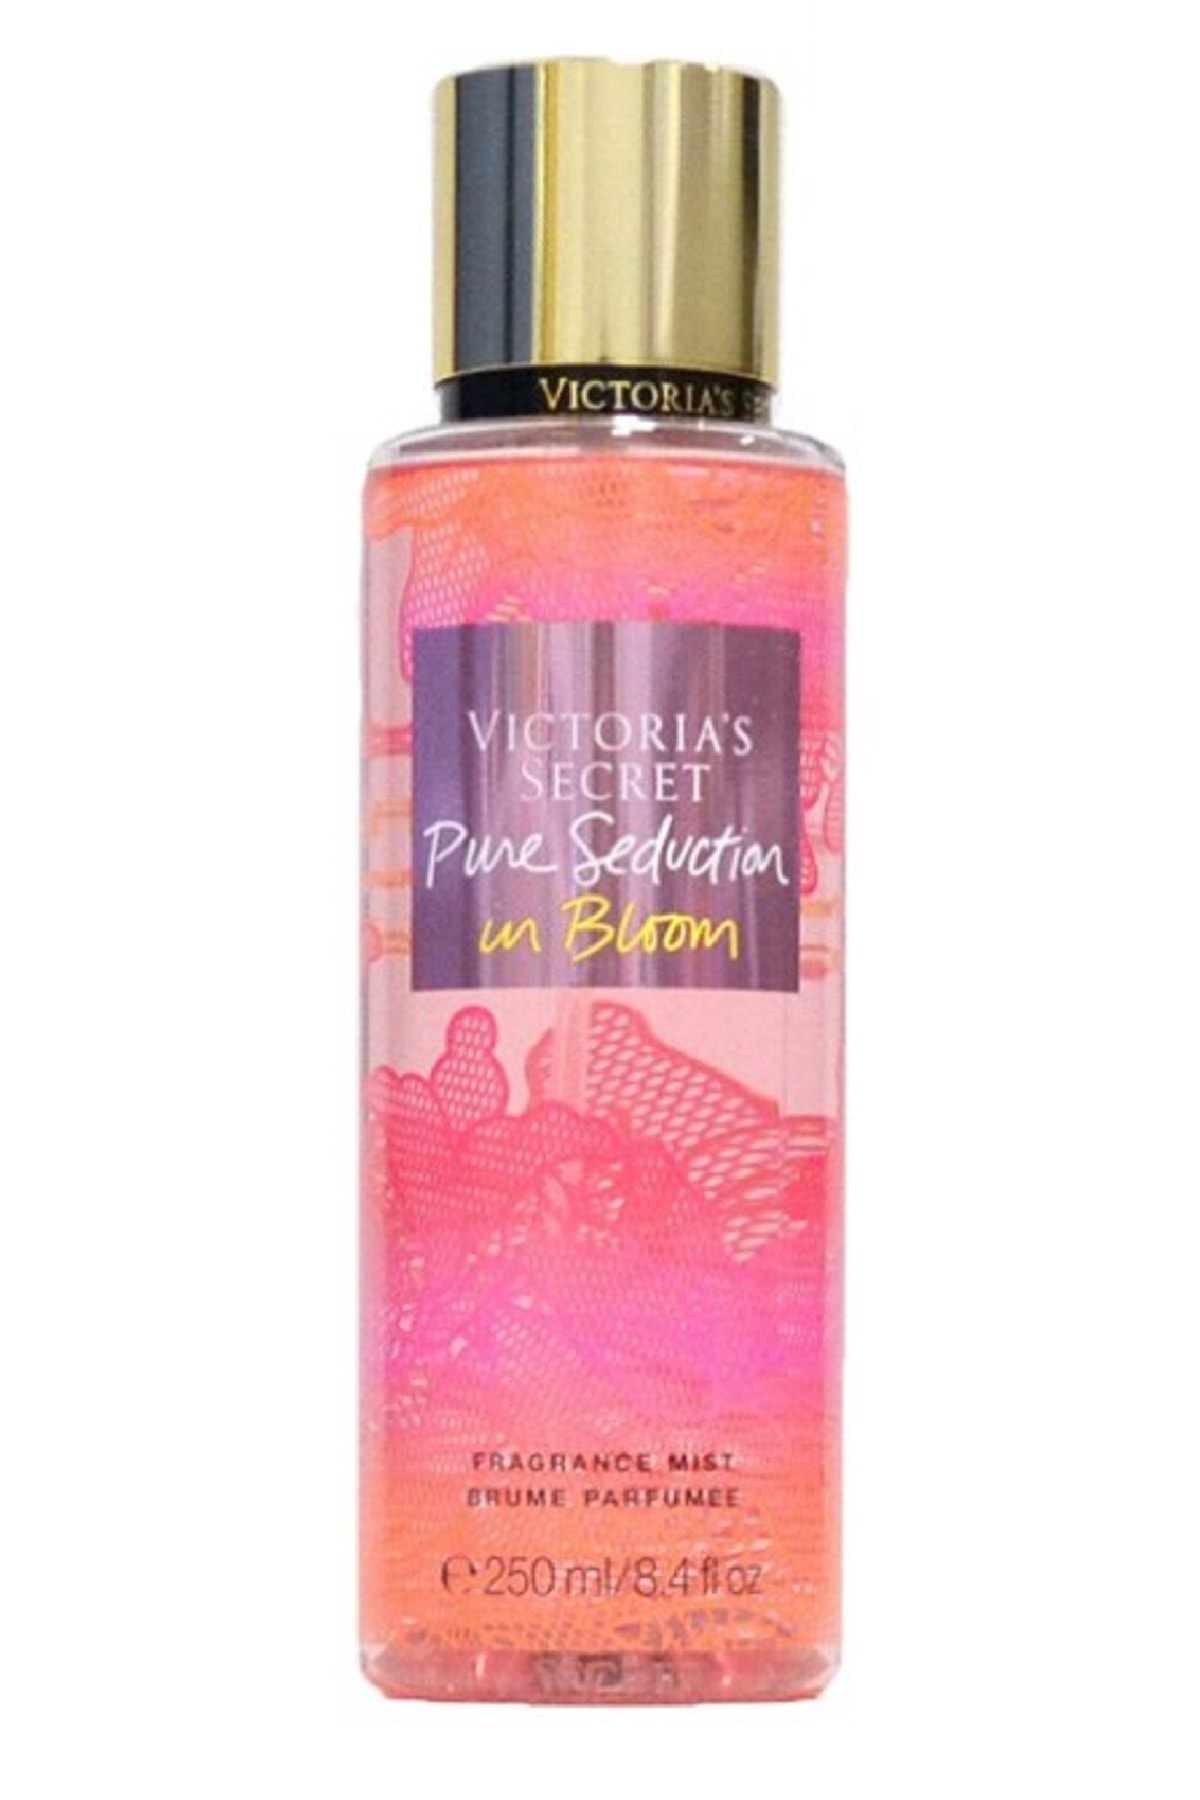 Victoria's Secret Pure Seduction In Bloom Fragrance Mist 250ml